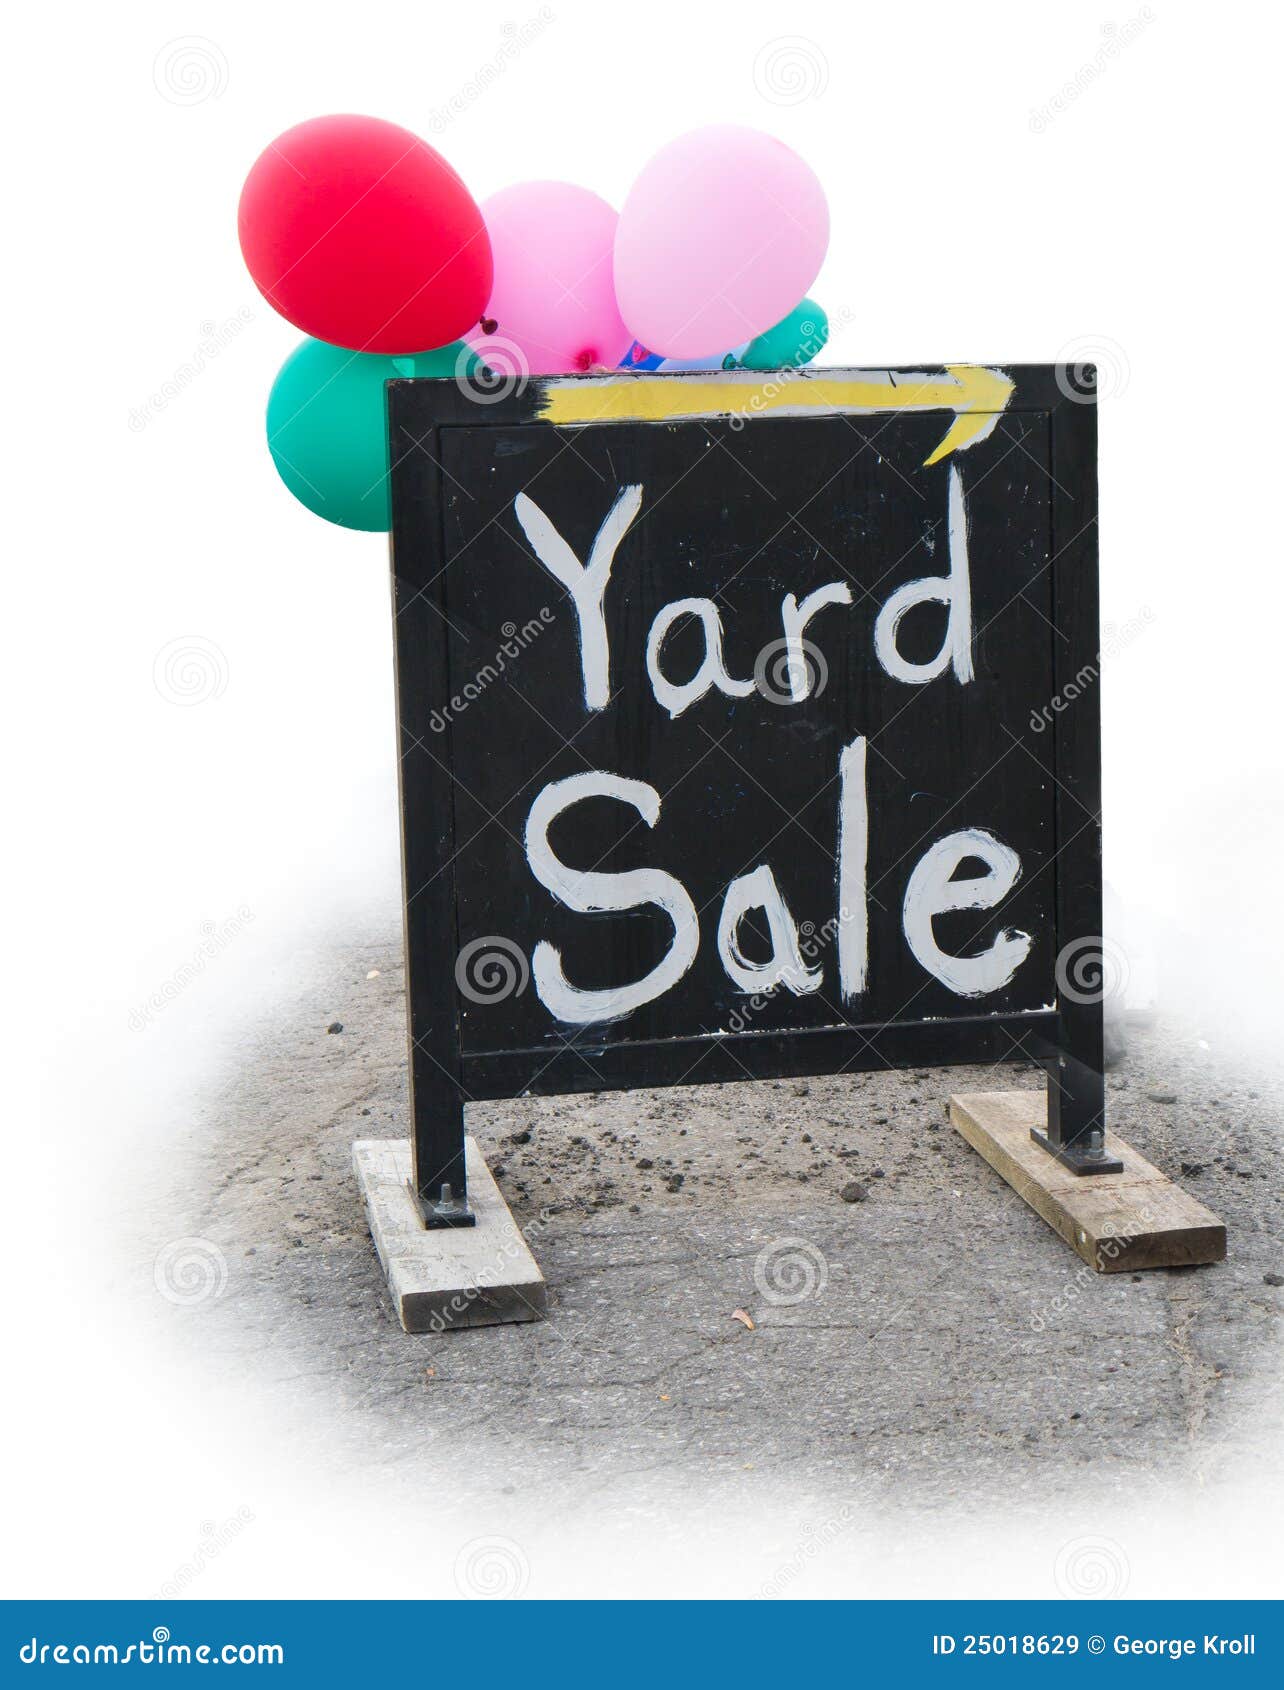 yard sale garage sale sign